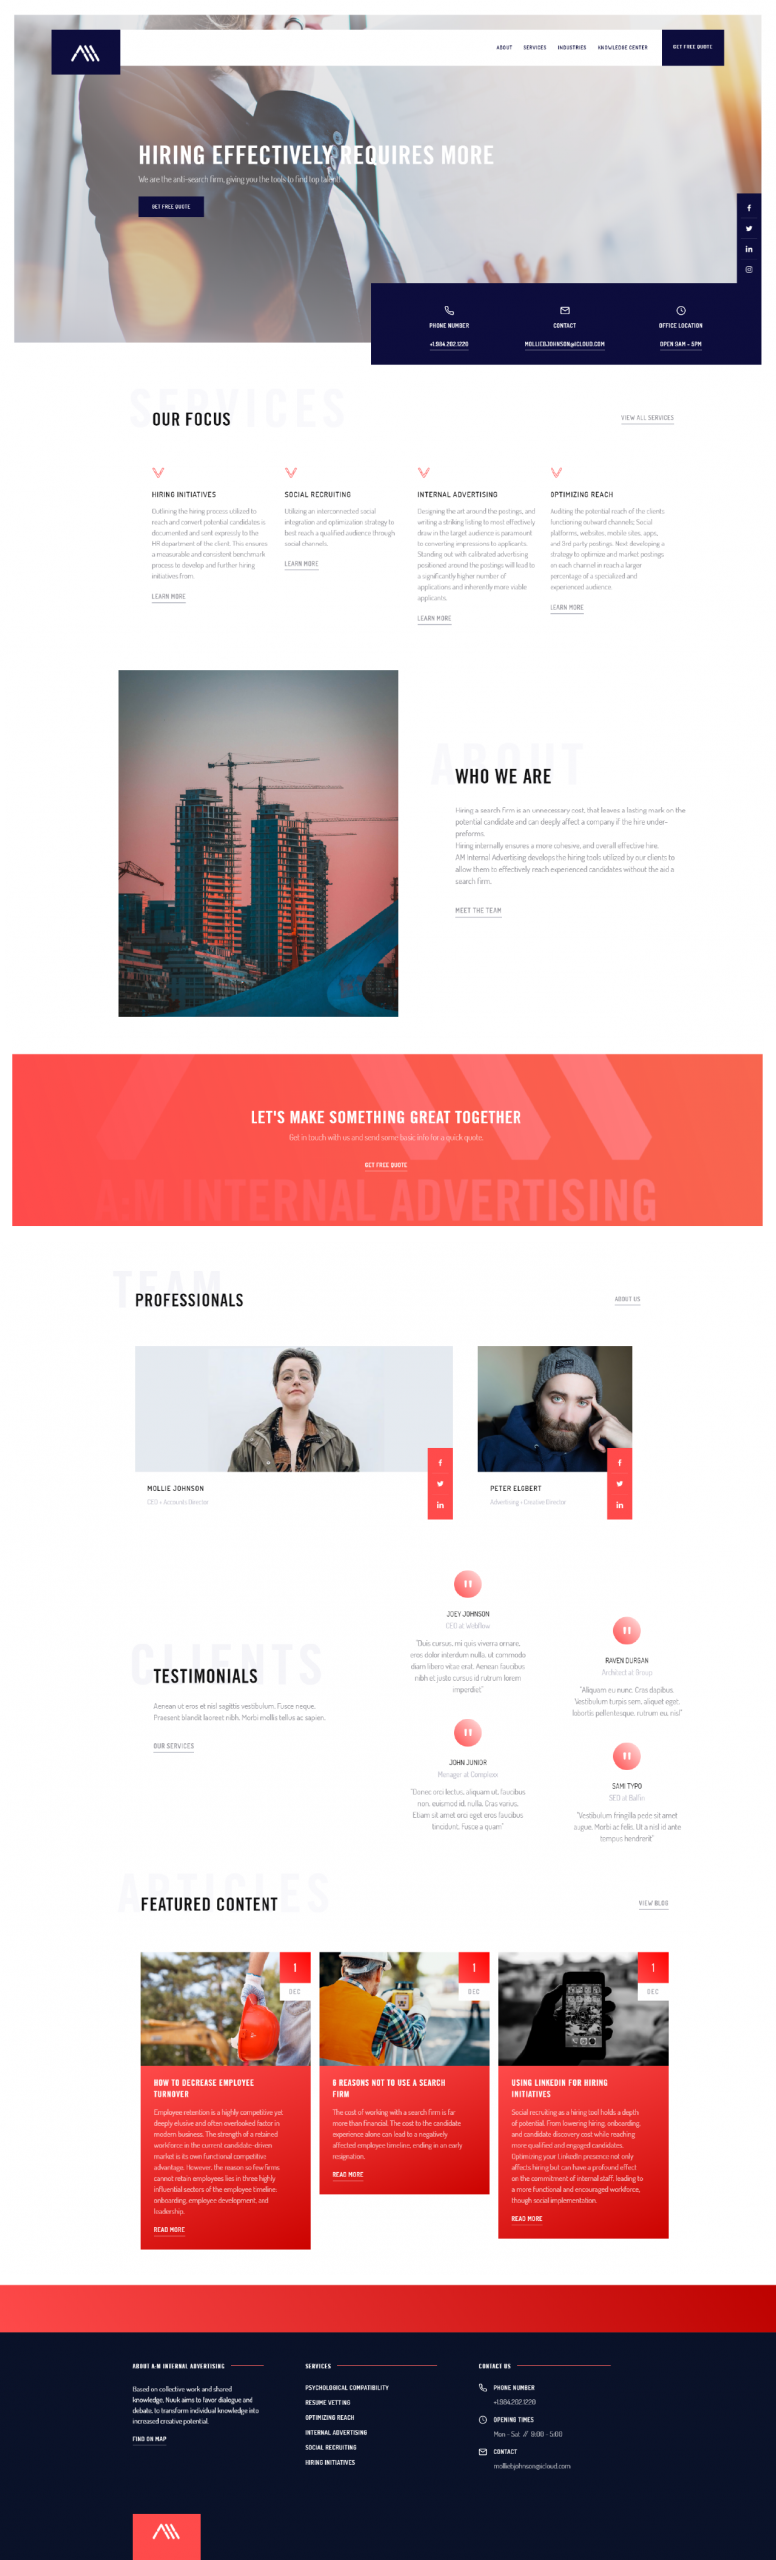 am internal advertising web design